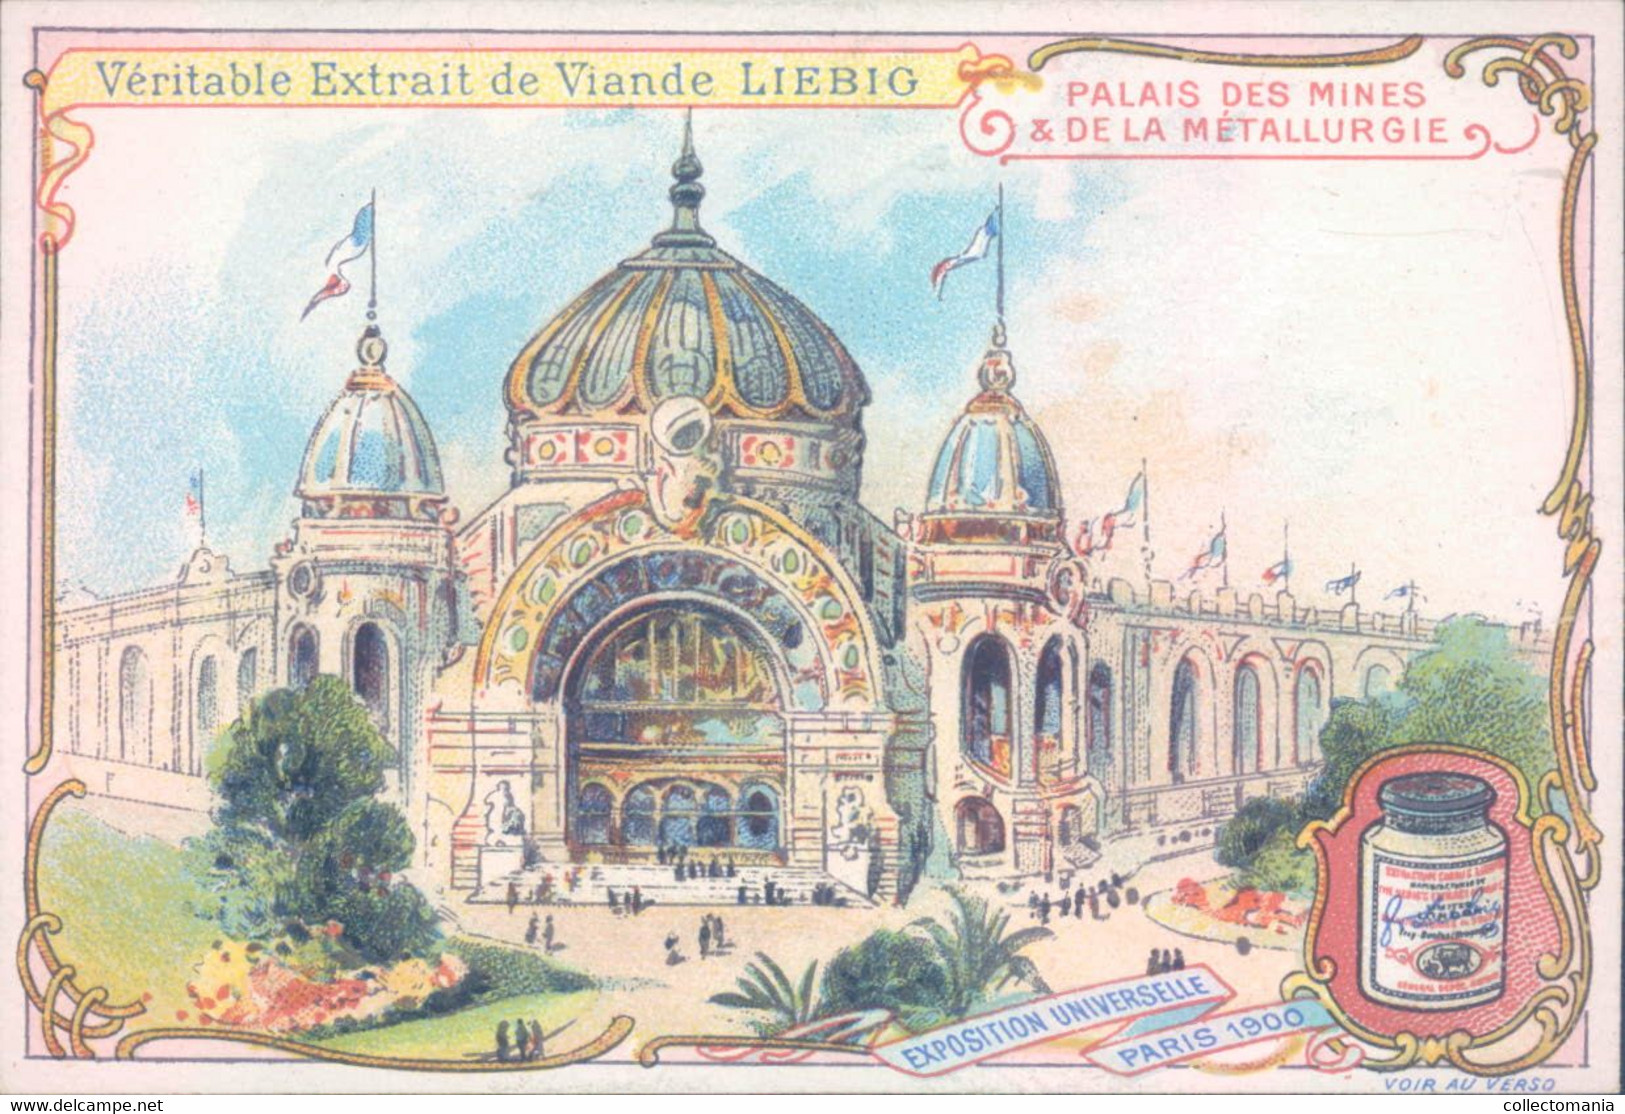 0624 Exposition Universelle Paris 1900 - Liebig Complete  6 Card Set VG Chromo Litho Cards - Liebig